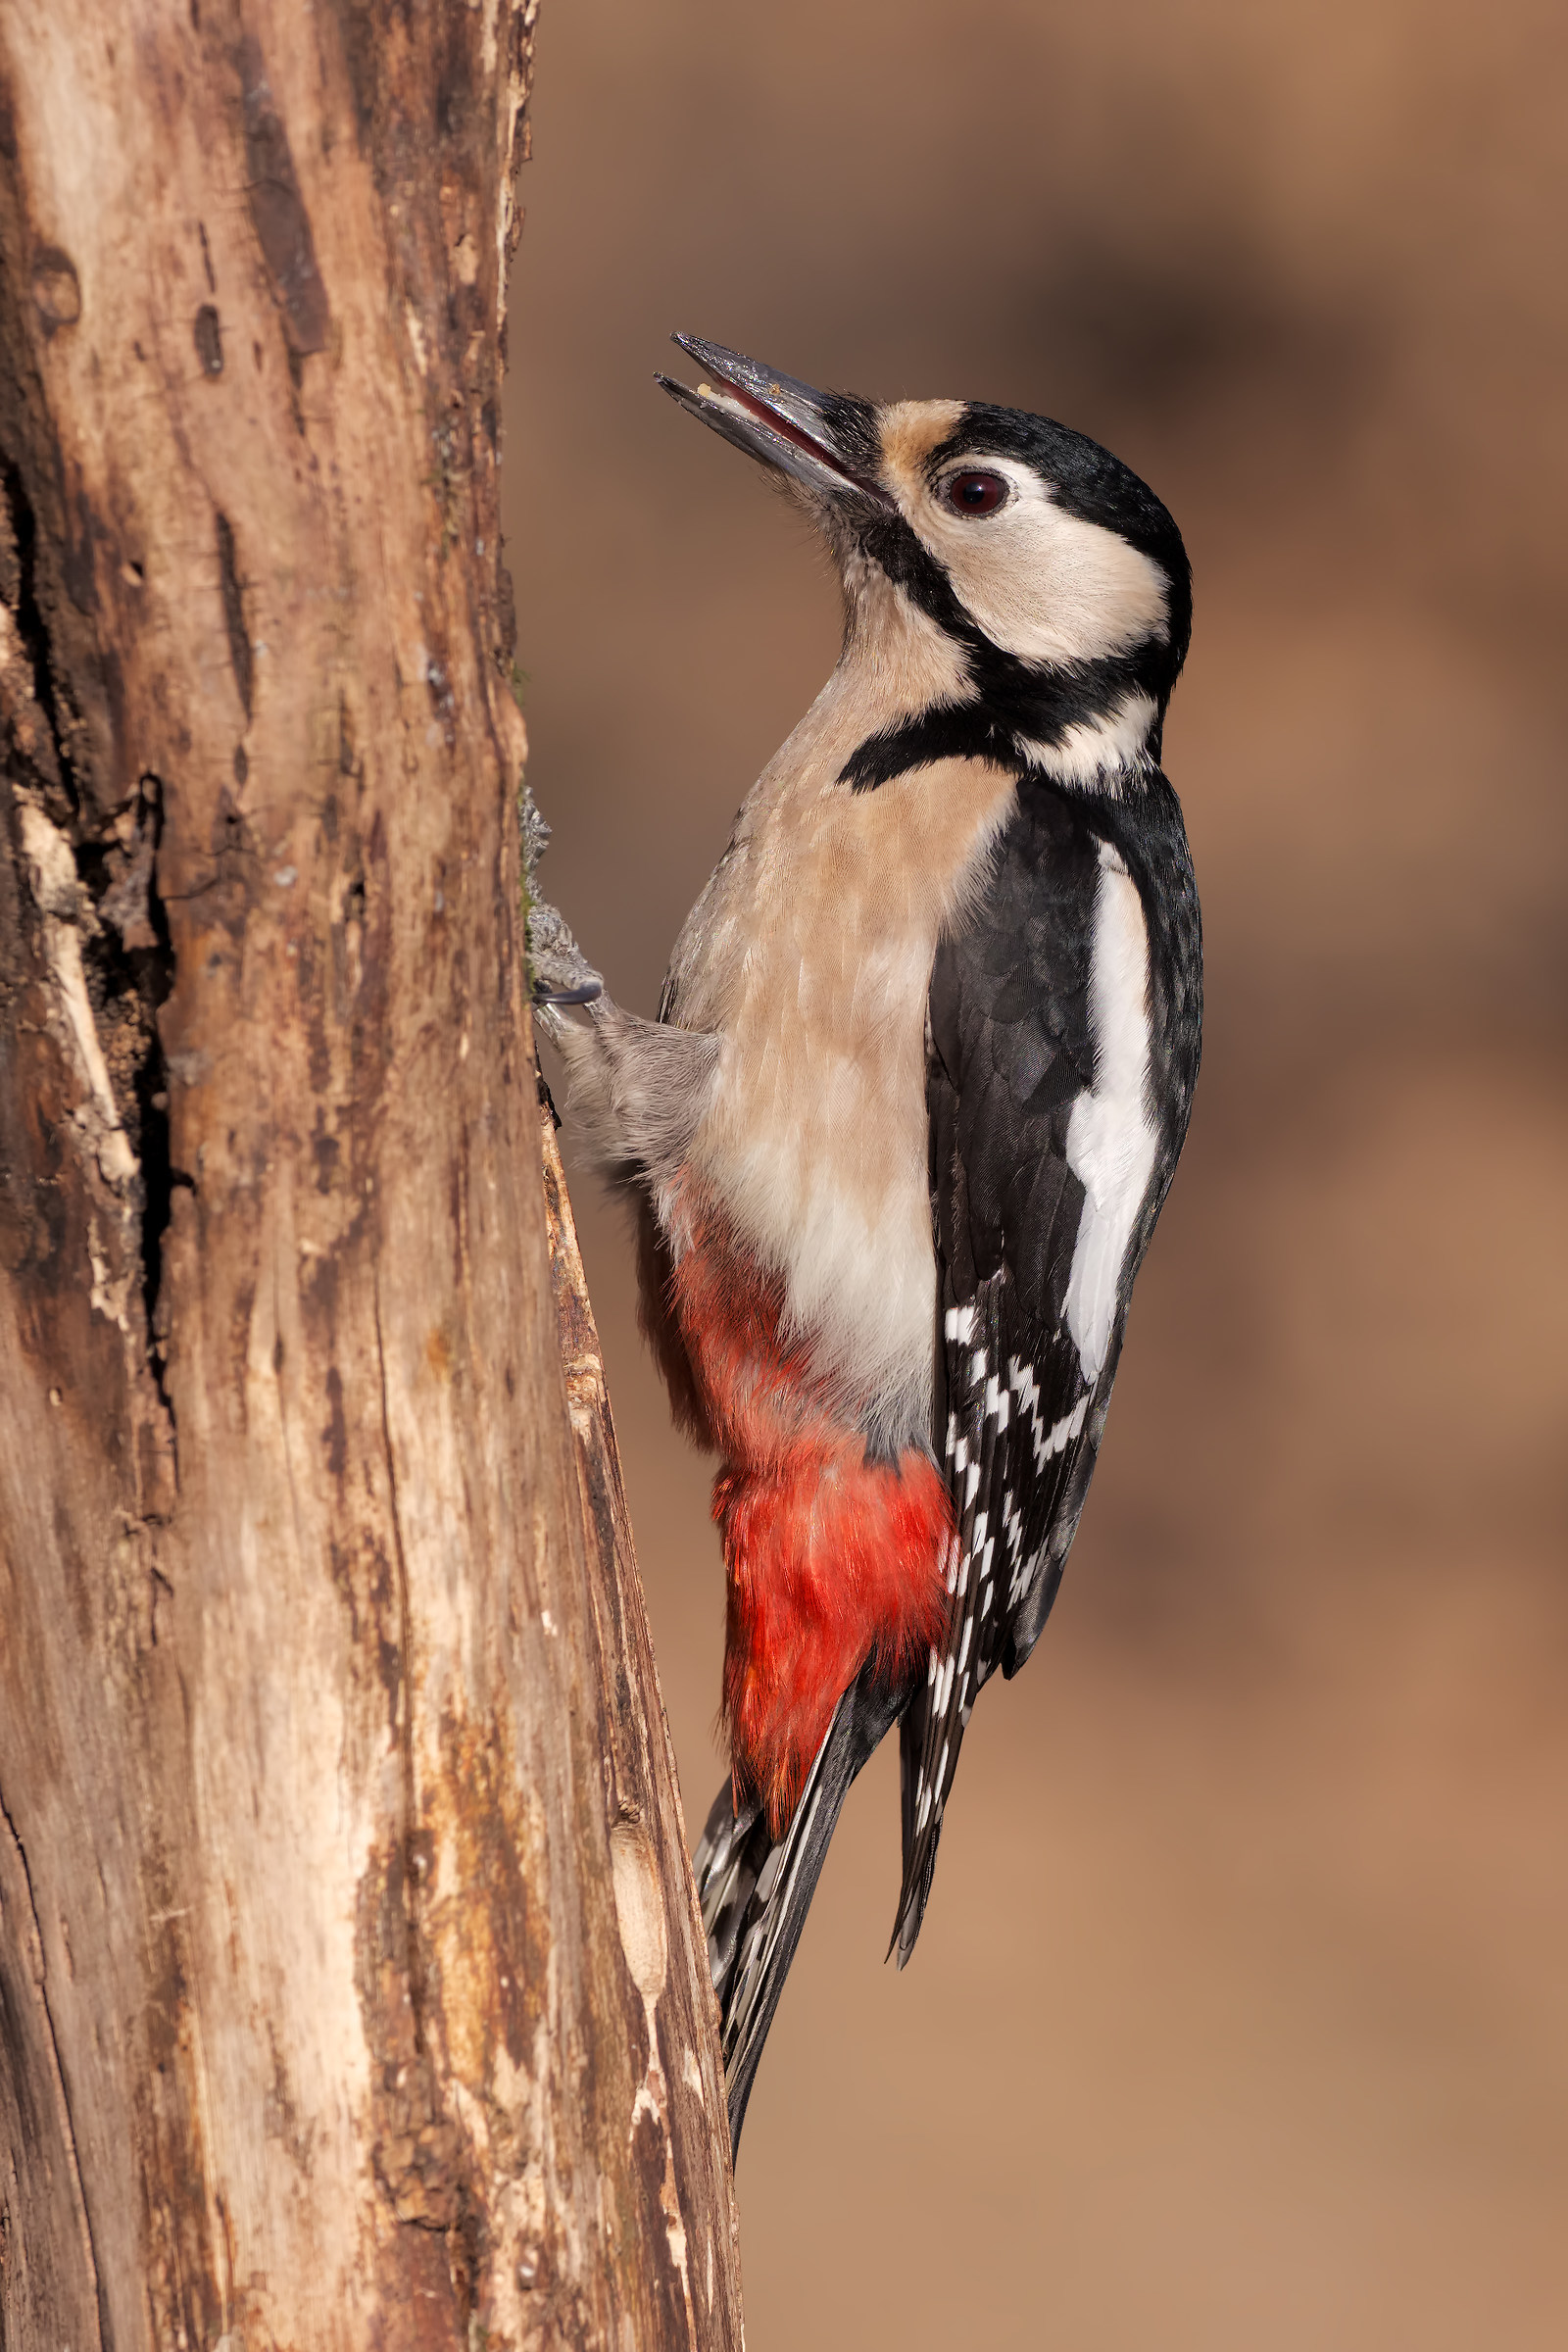 Spotted Woodpecker - e-m1 mark II...